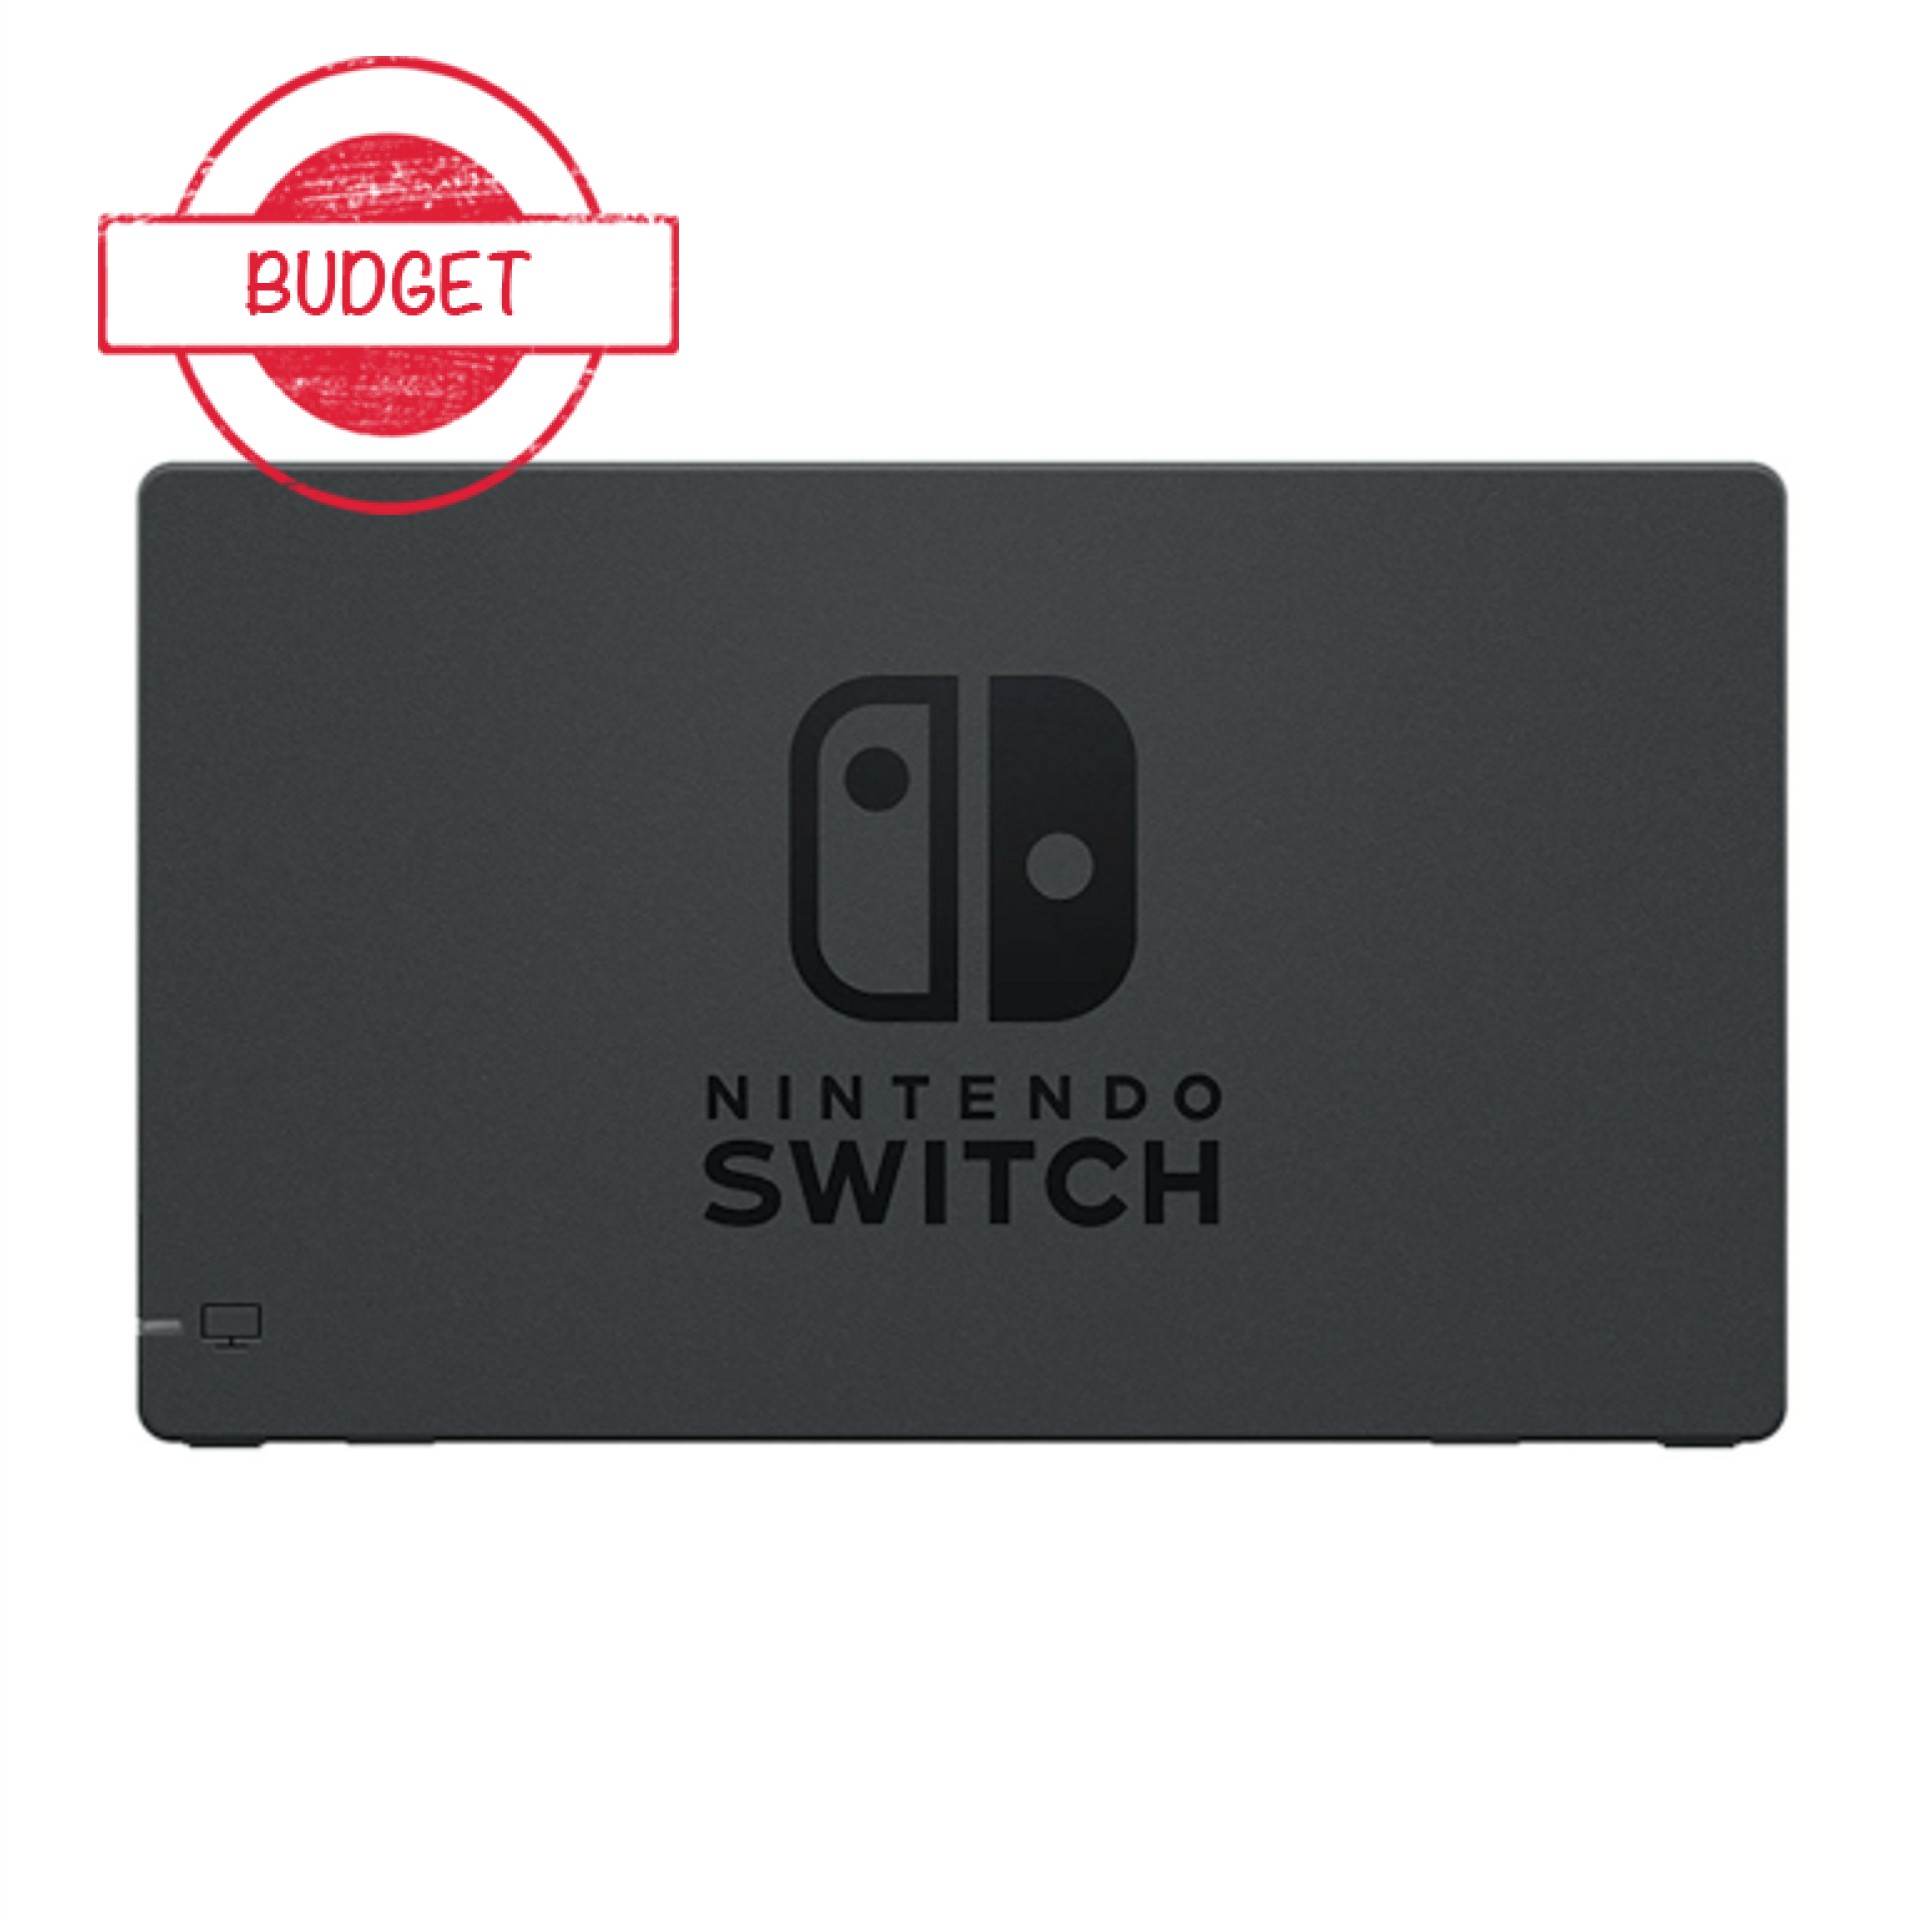 Nintendo Switch Dock (Los) - Budget Kopen | Nintendo Switch Hardware